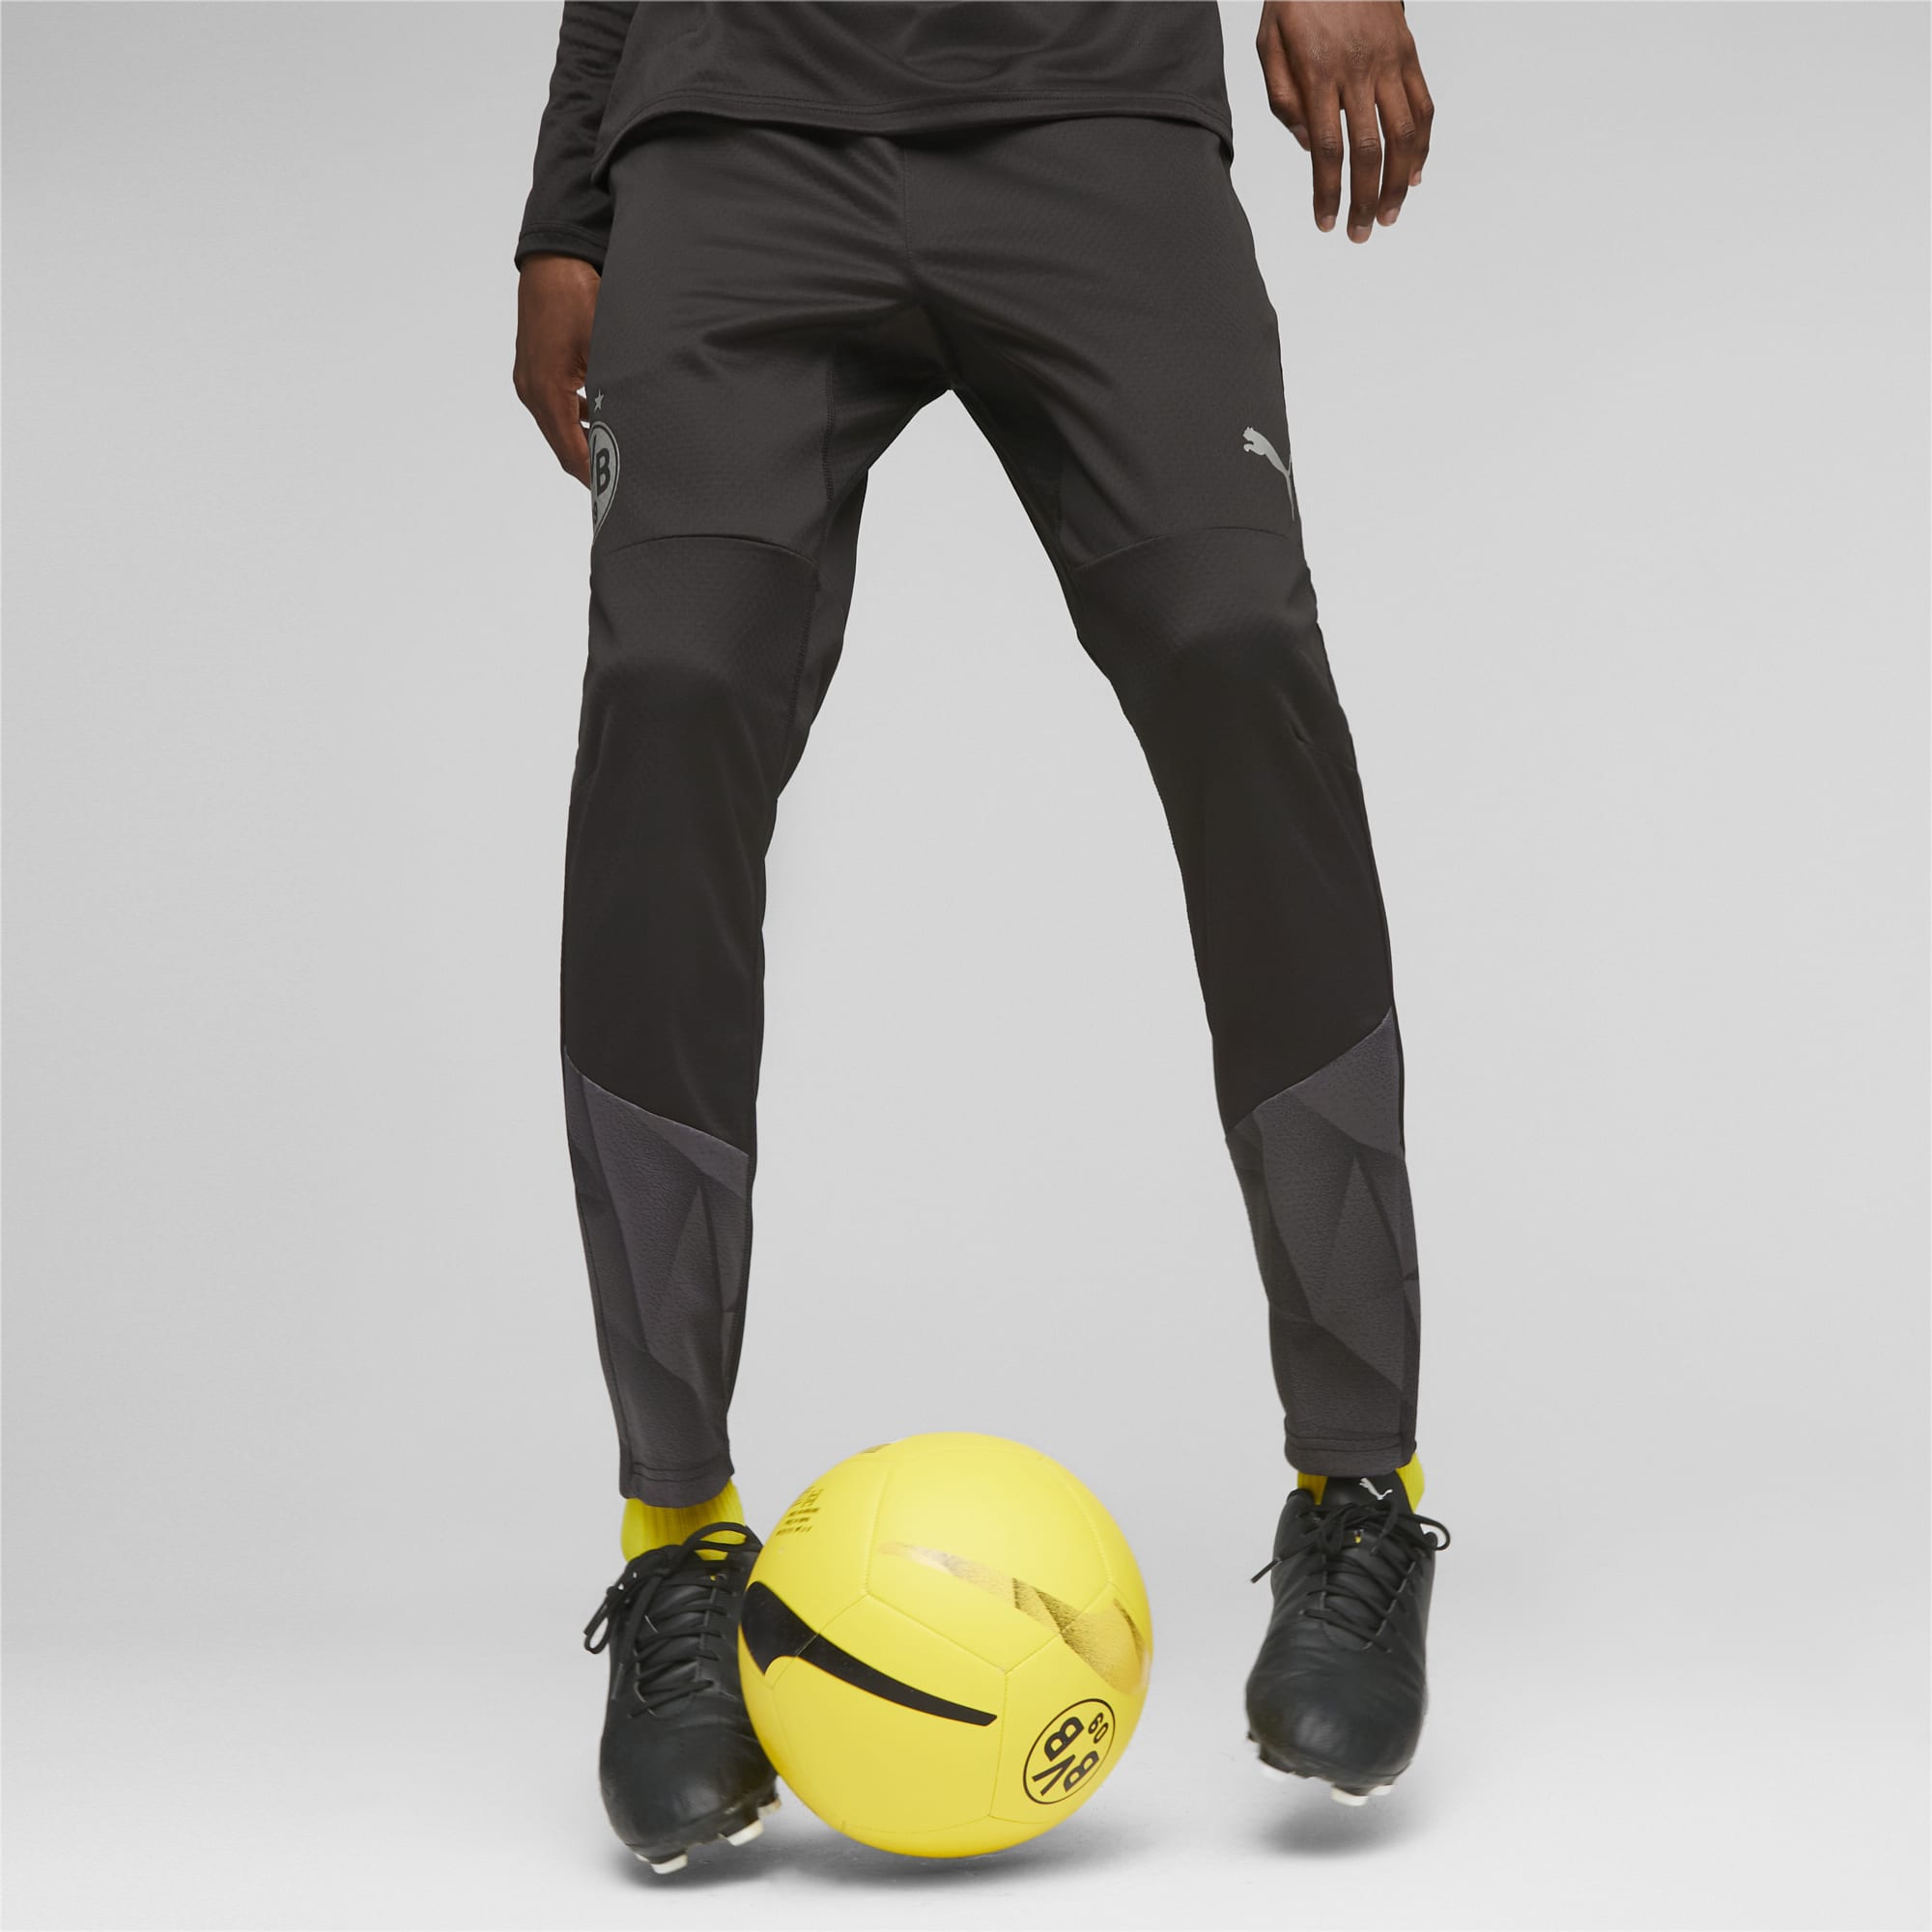 Men's PUMA Borussia Dortmund Football Training Pants, Black/Silver, Size L, Clothing